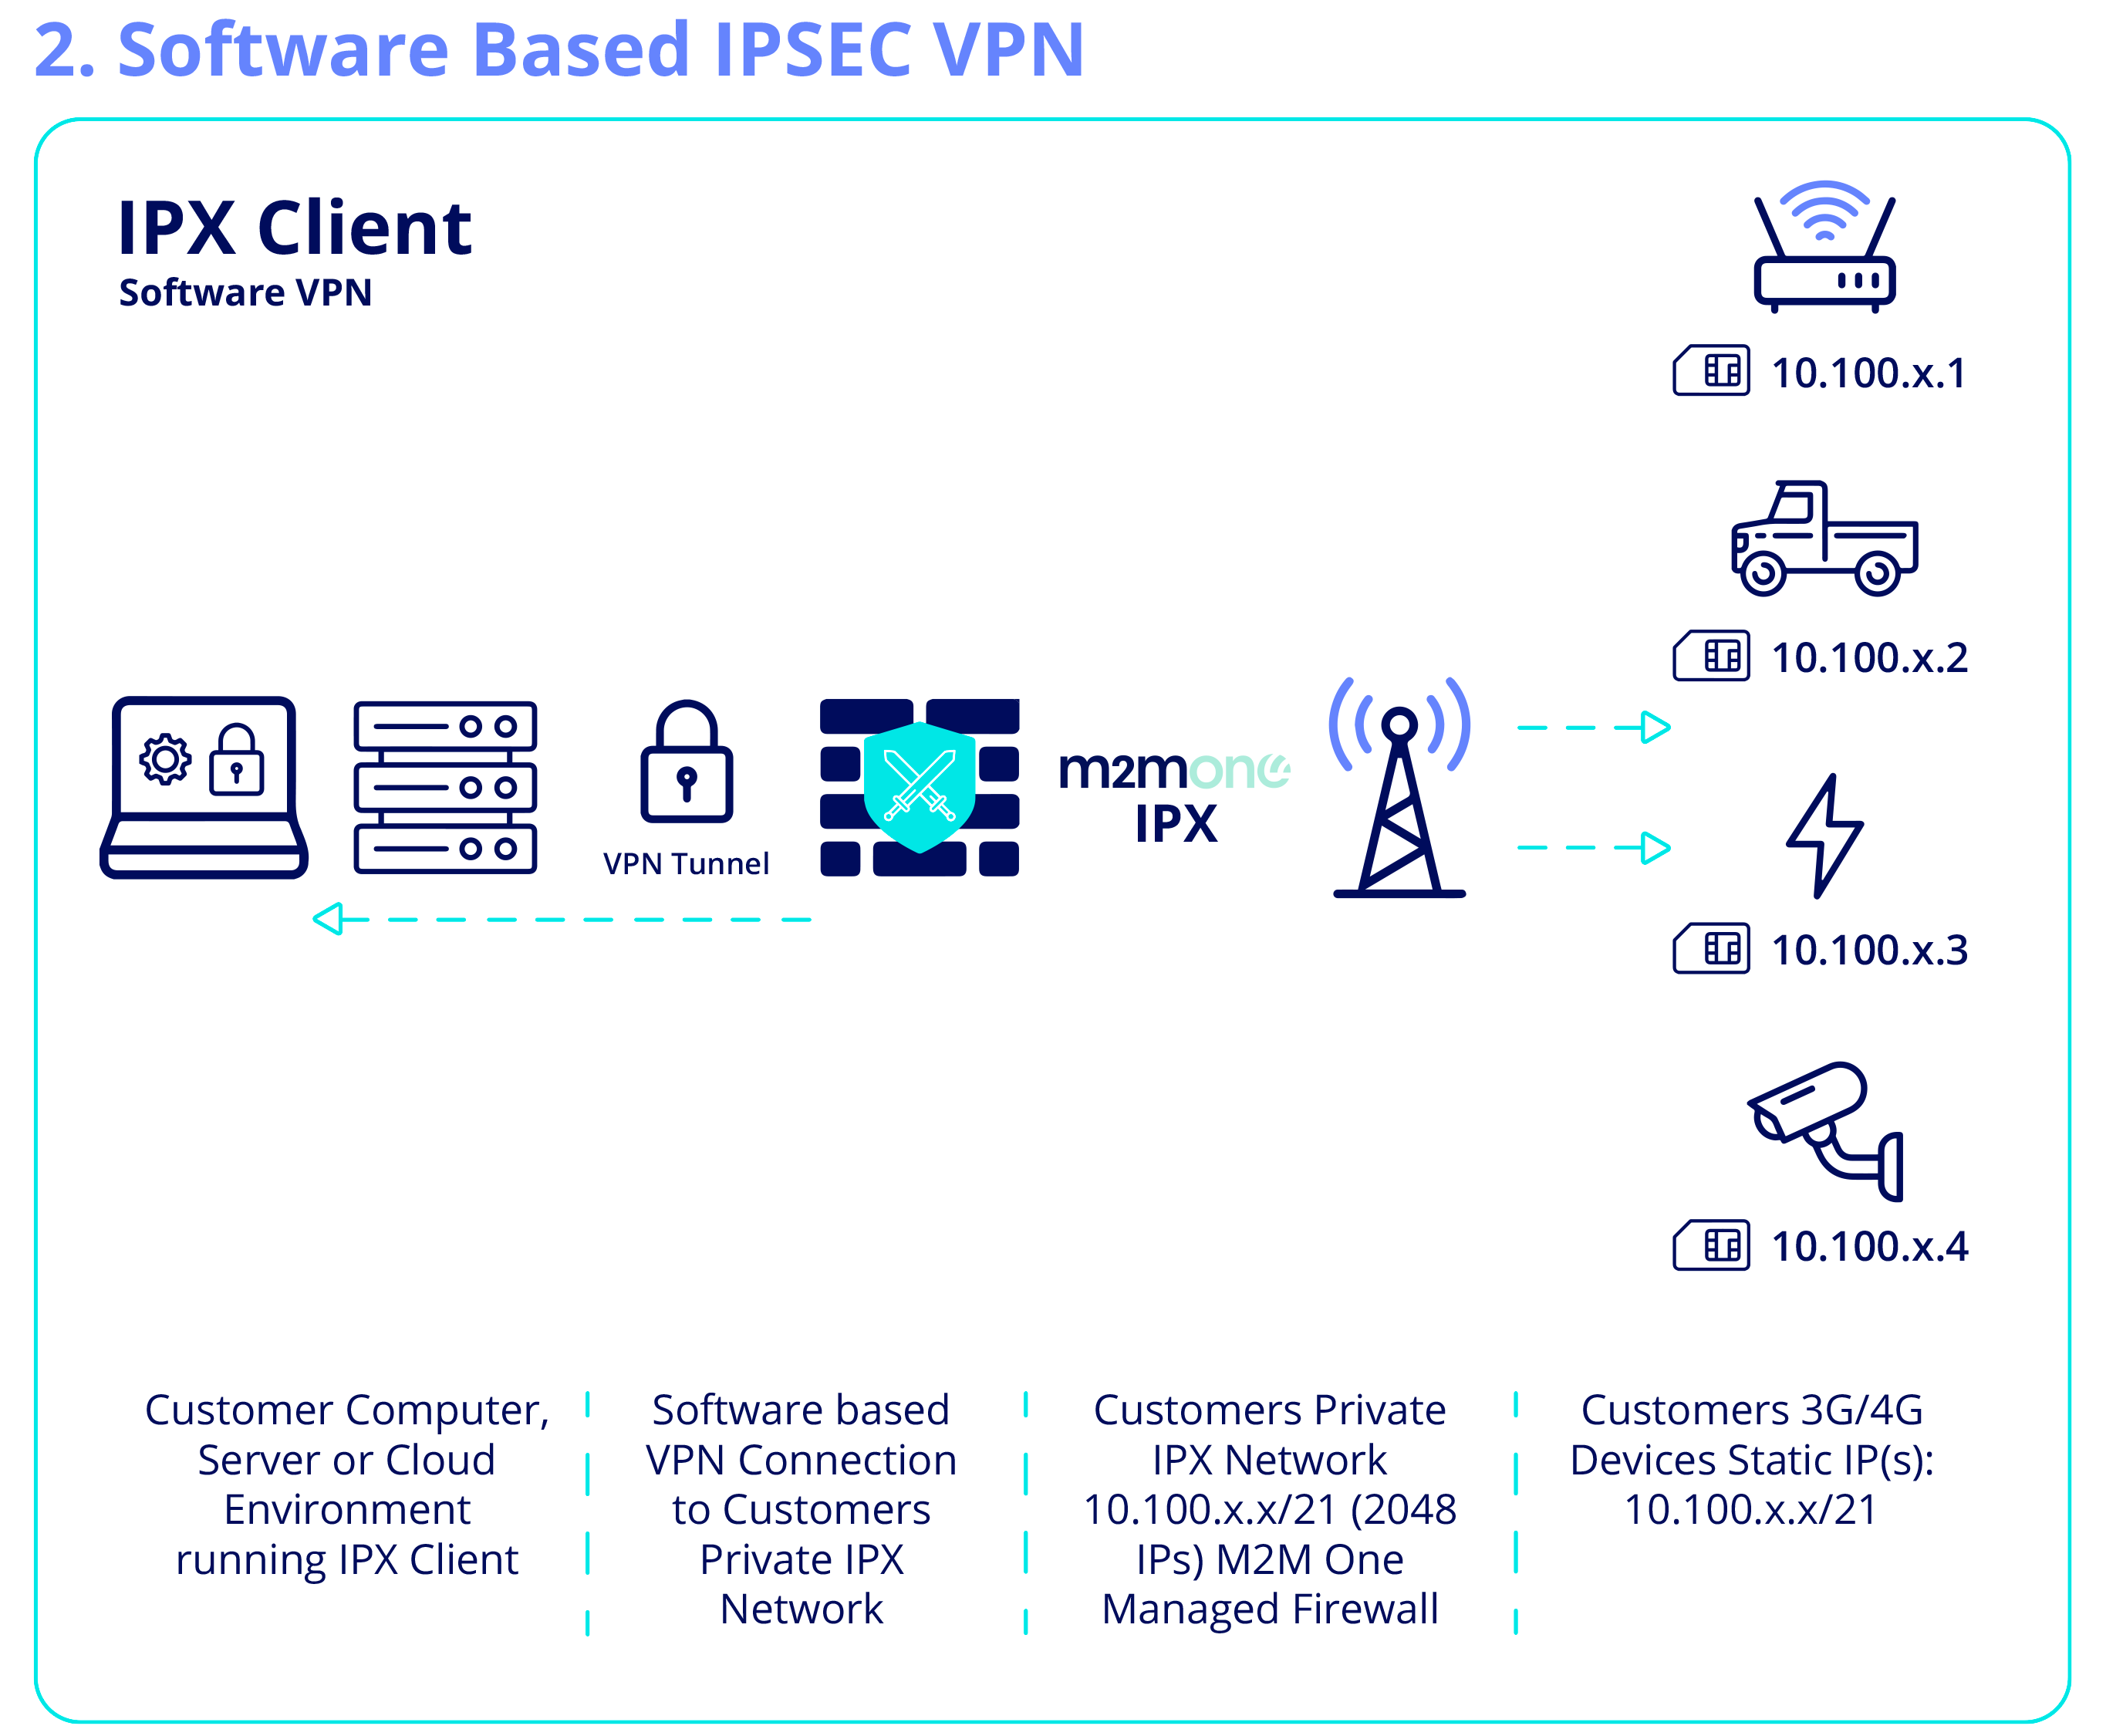 M2M One IPXClient Diagram